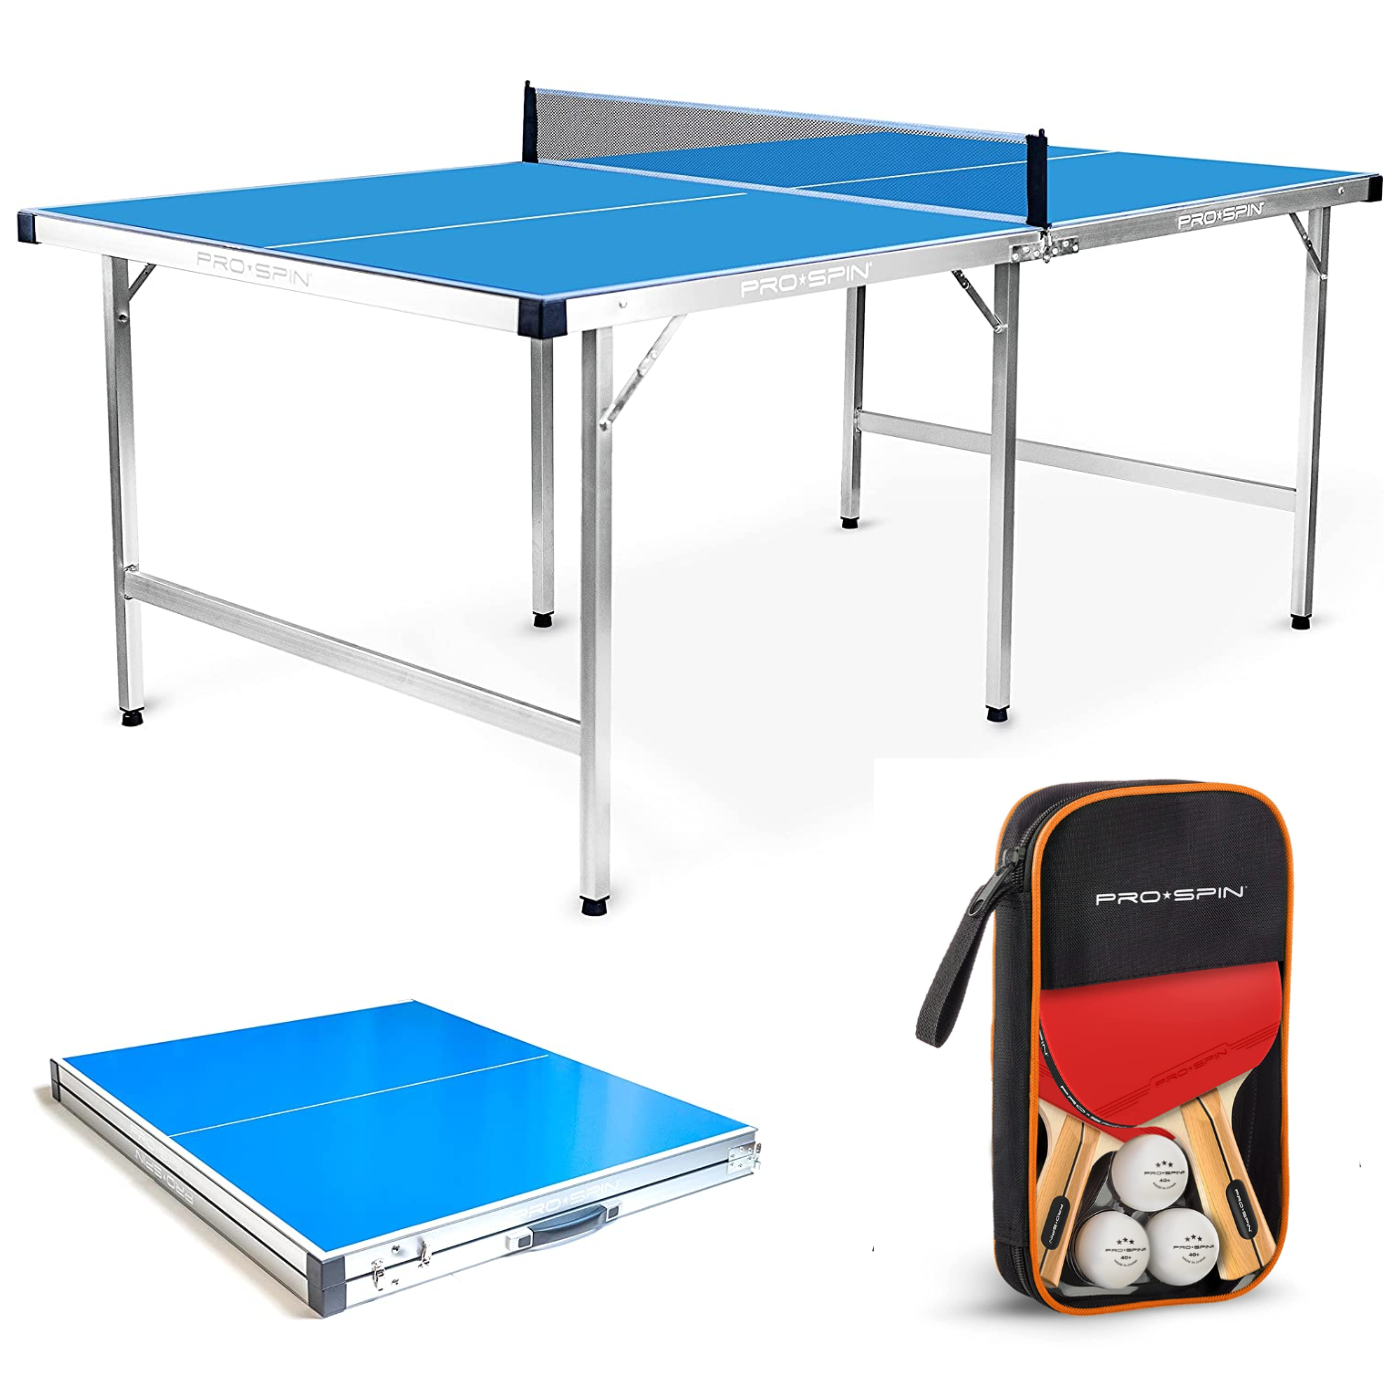 Anywhere Sports Retractable Table Tennis Set - Toy Sense